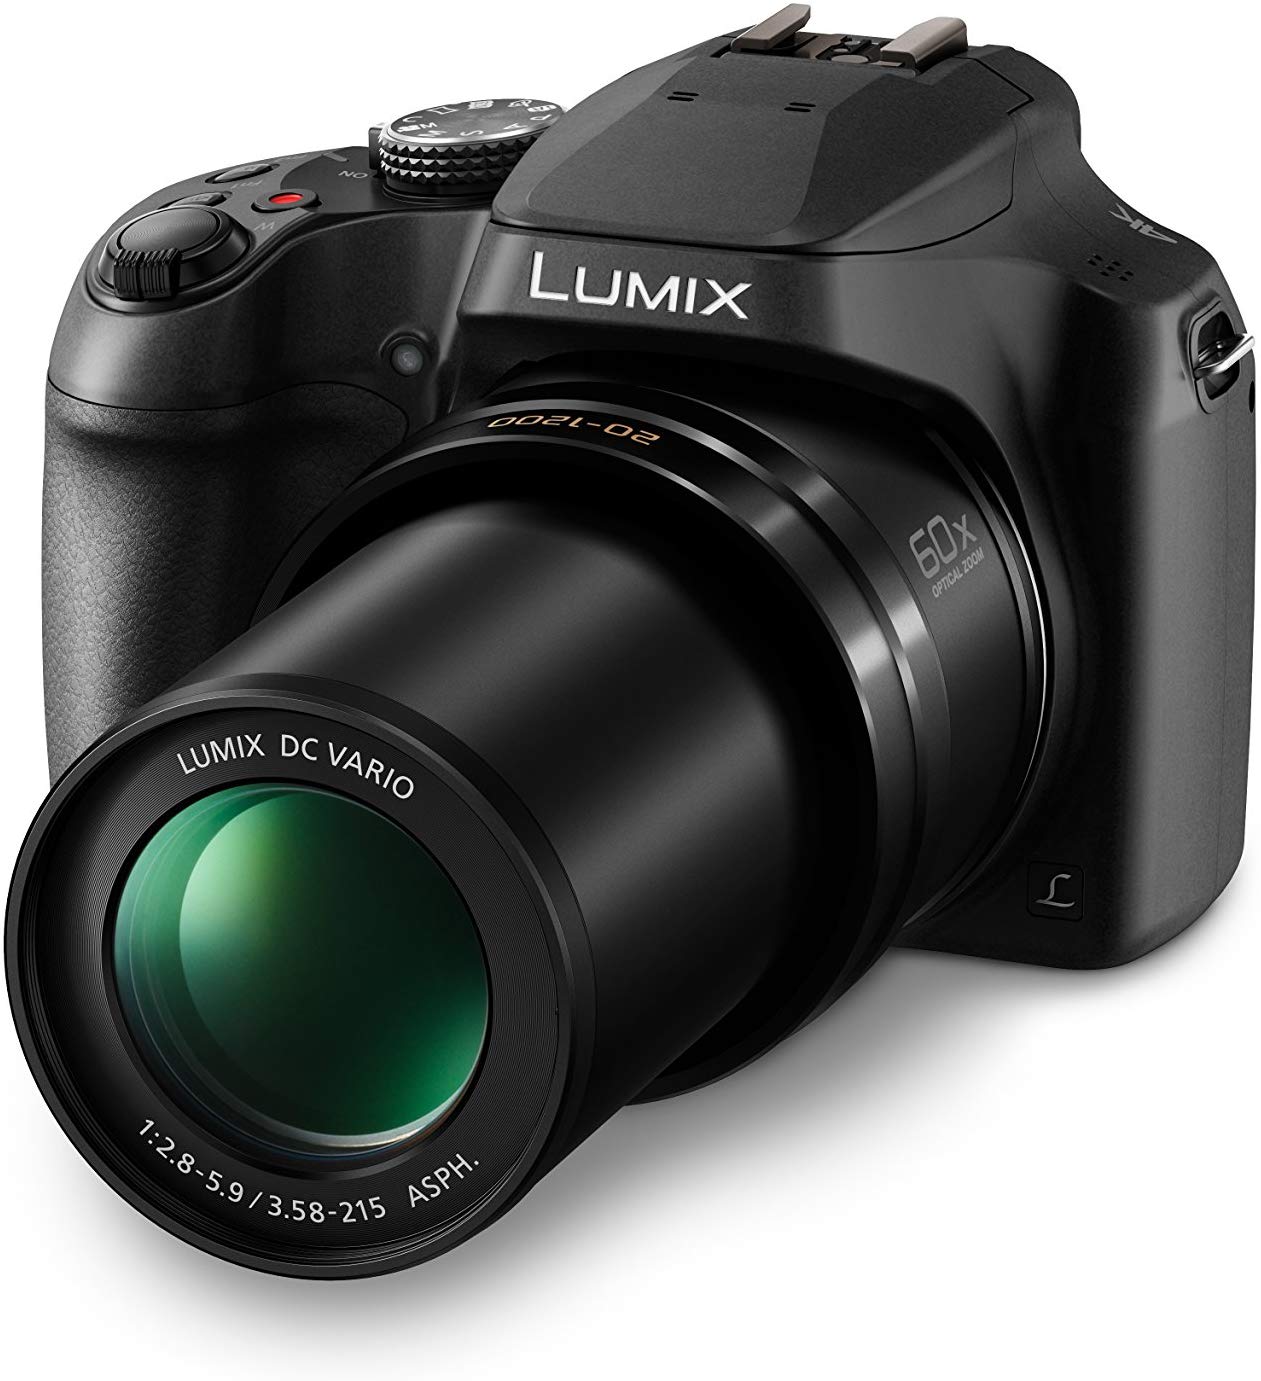  panasonic lumix bridge camera